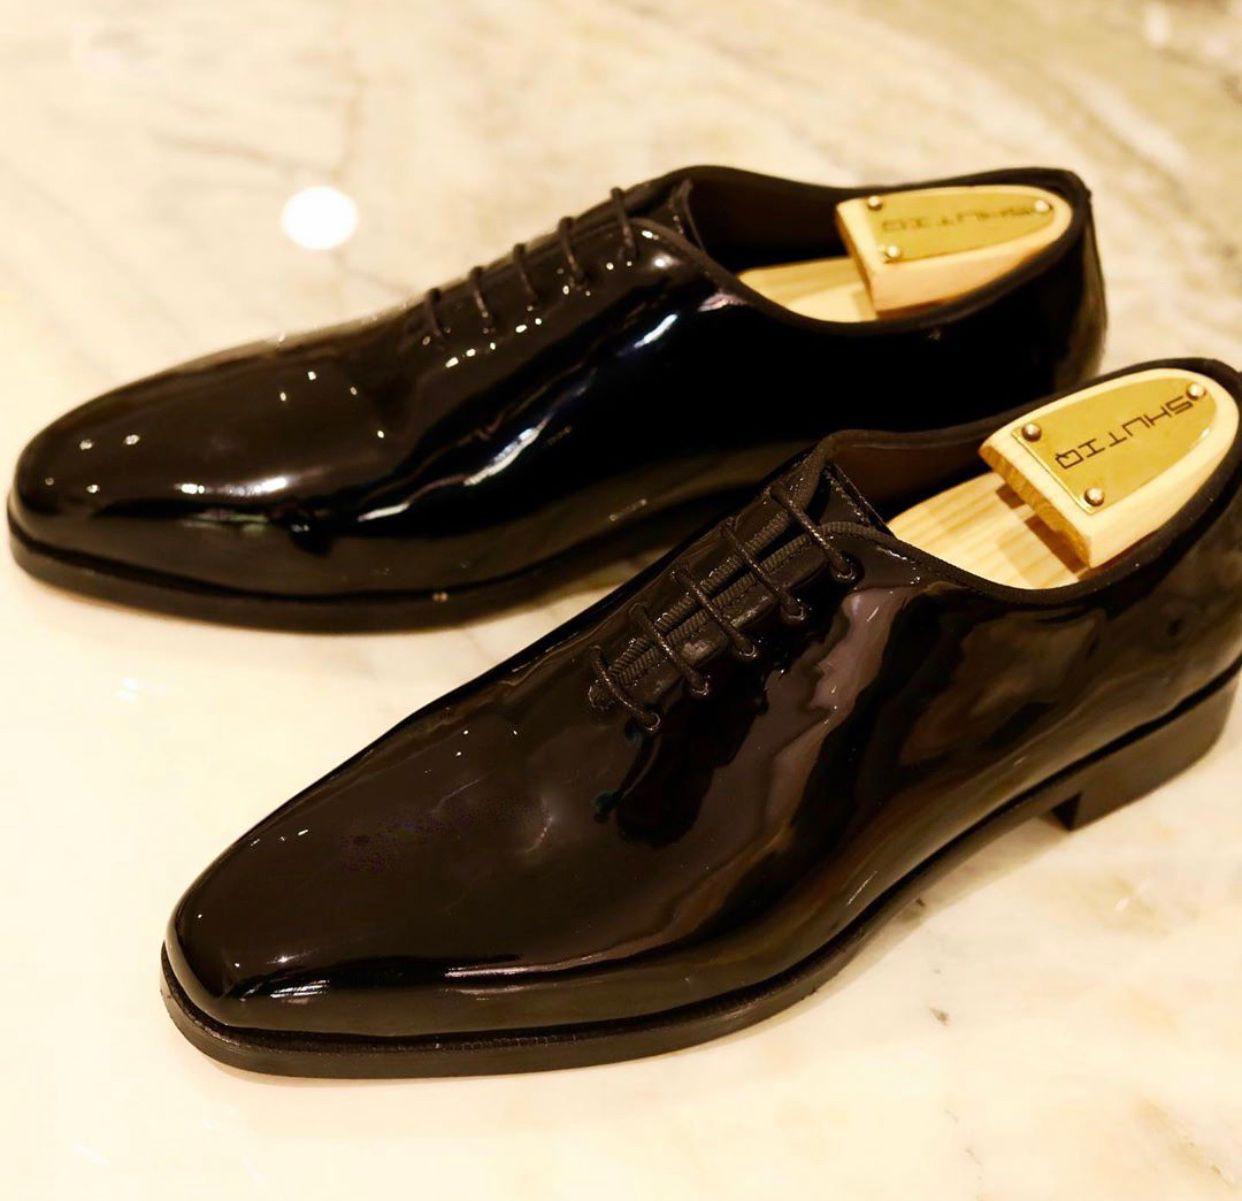 Classy Shiny Black Formal Shoes